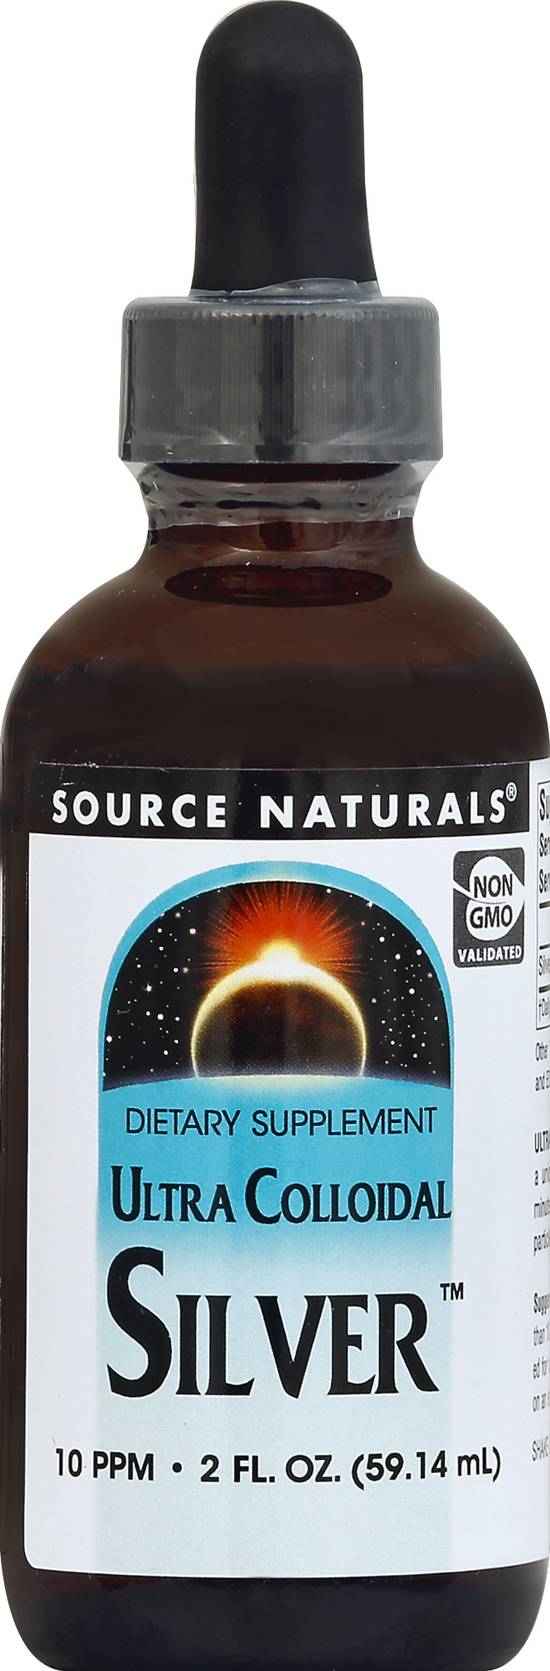 Source Naturals Ultra Colloidal Silver Dietary Supplement